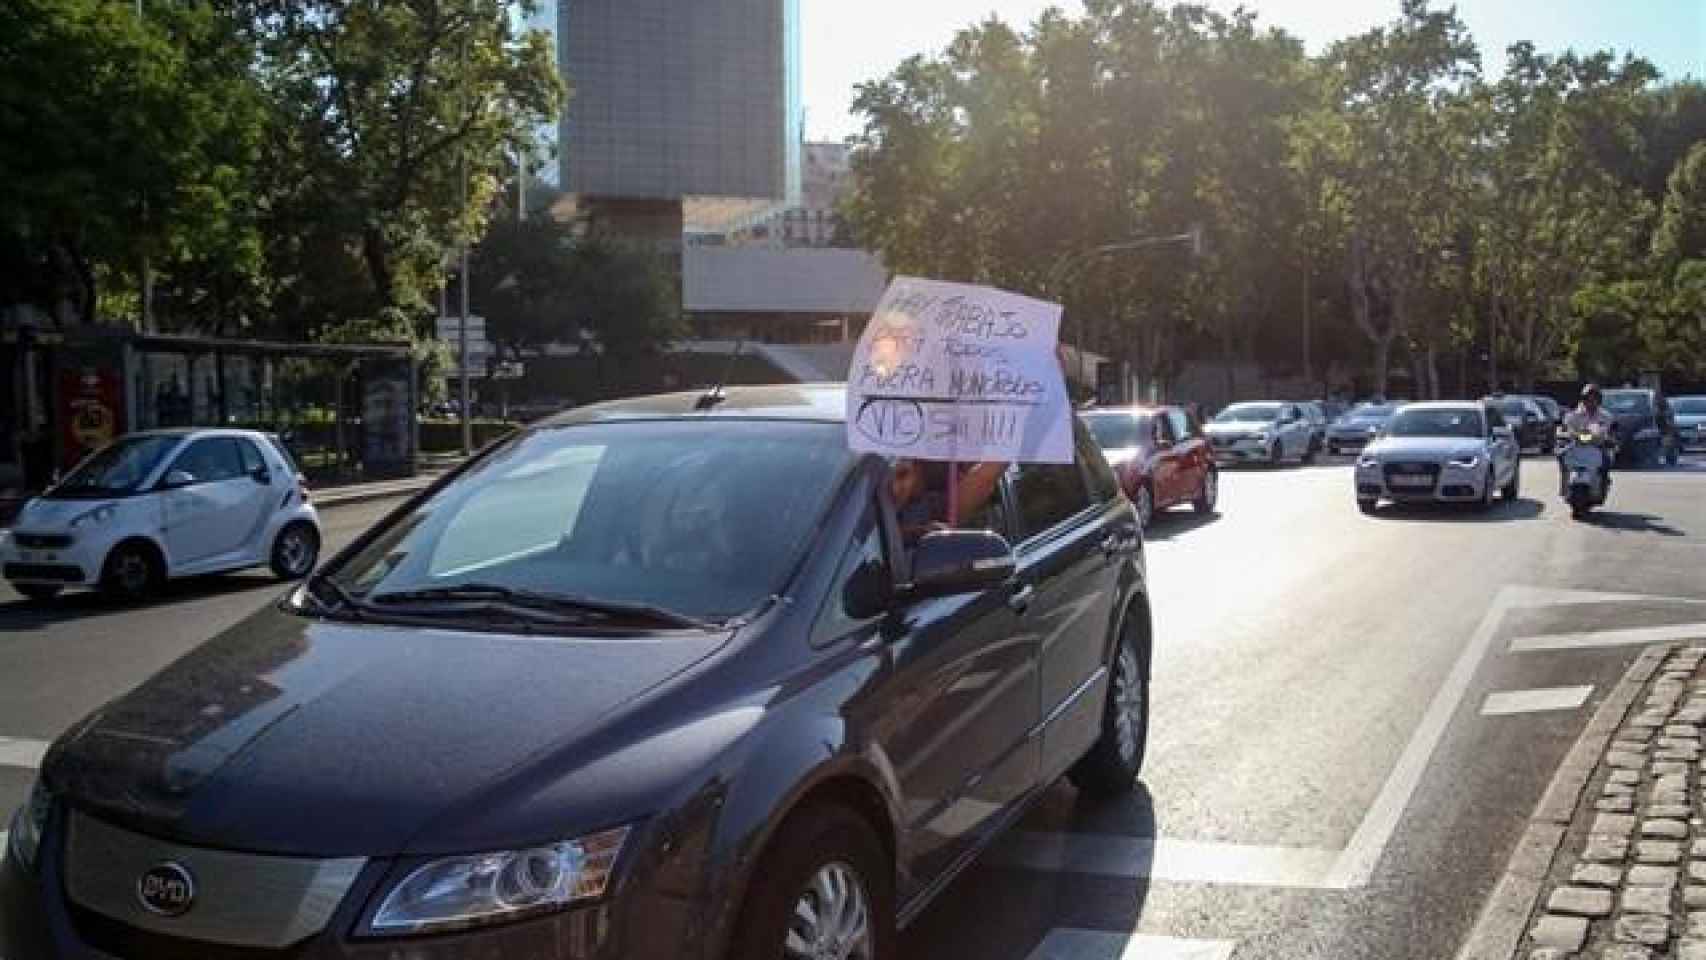 Un conductor de VTC protestando / EUROPA PRESS